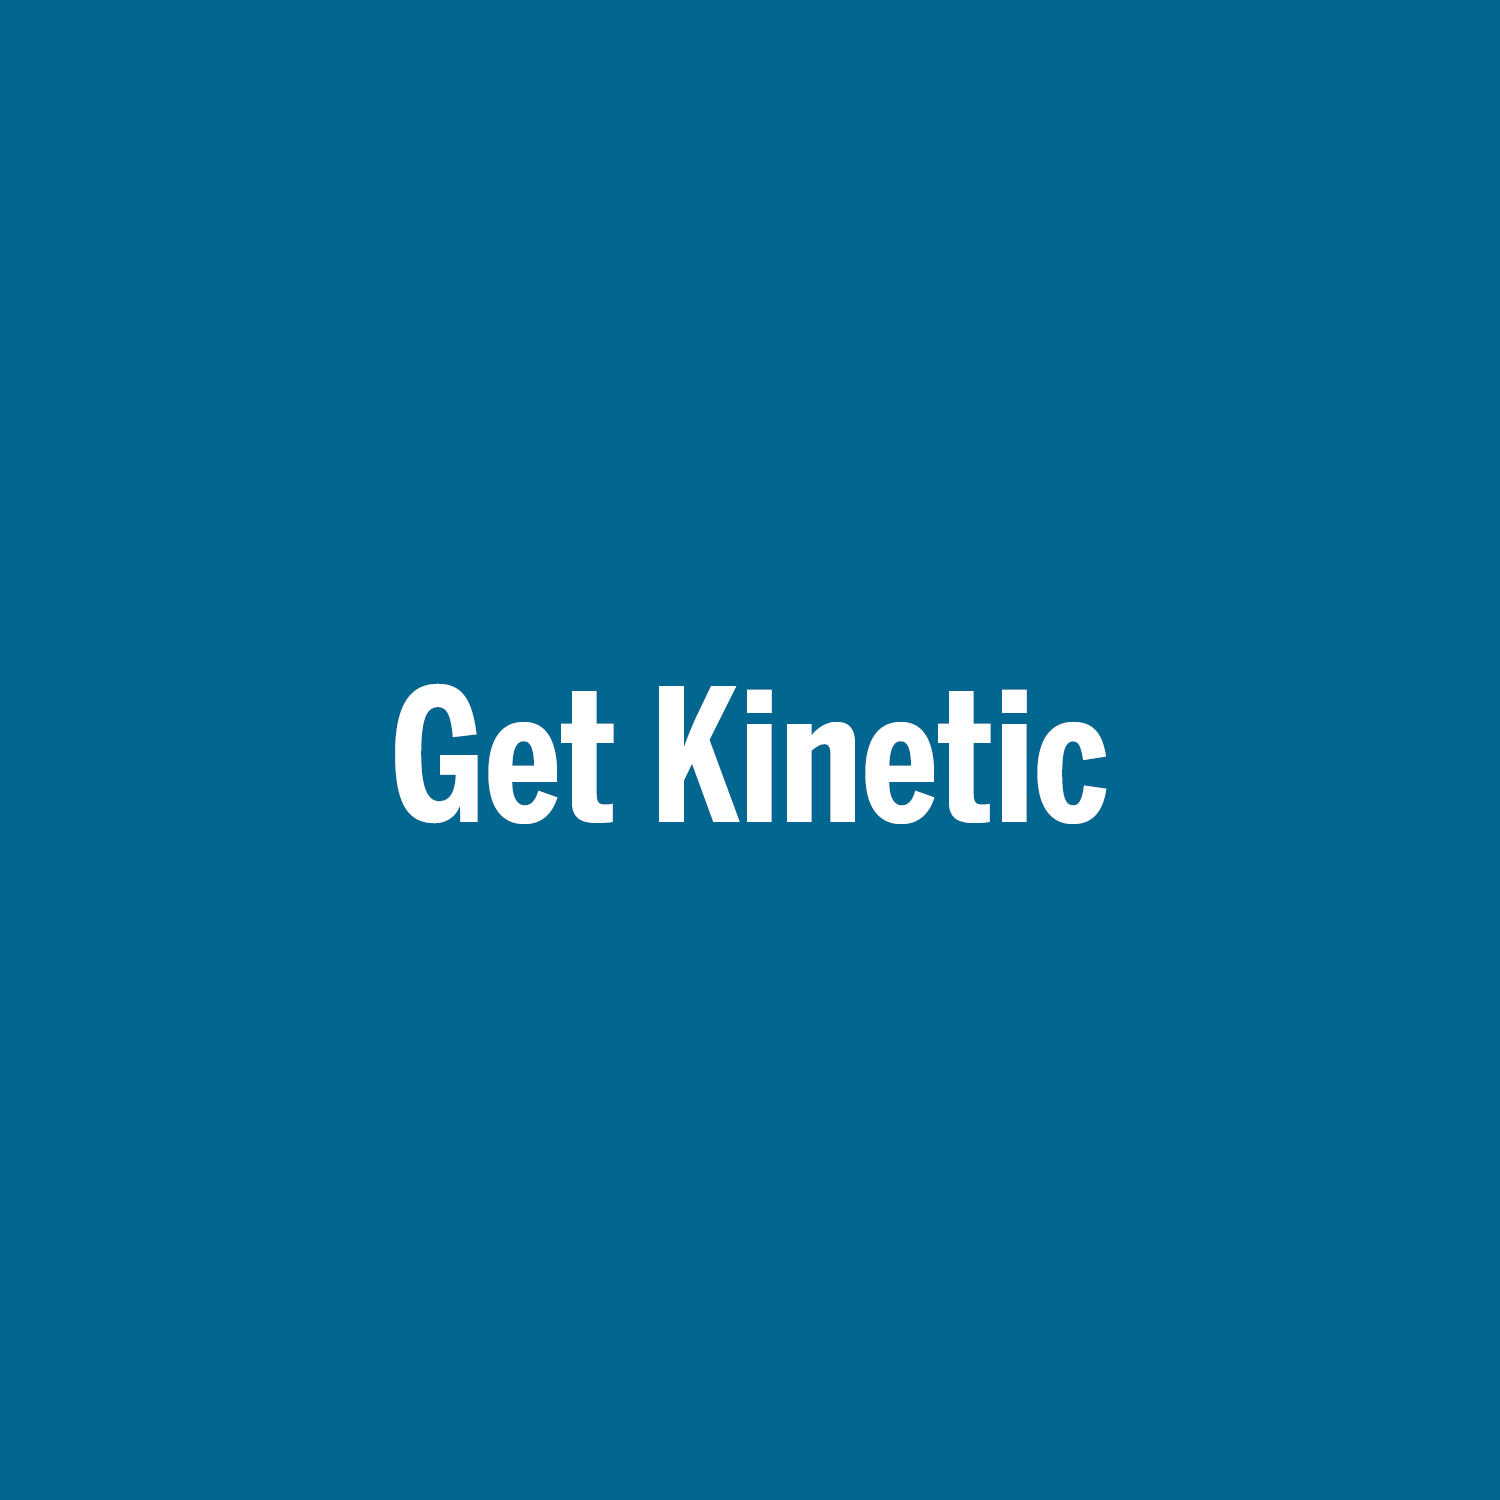 Get Kinetic